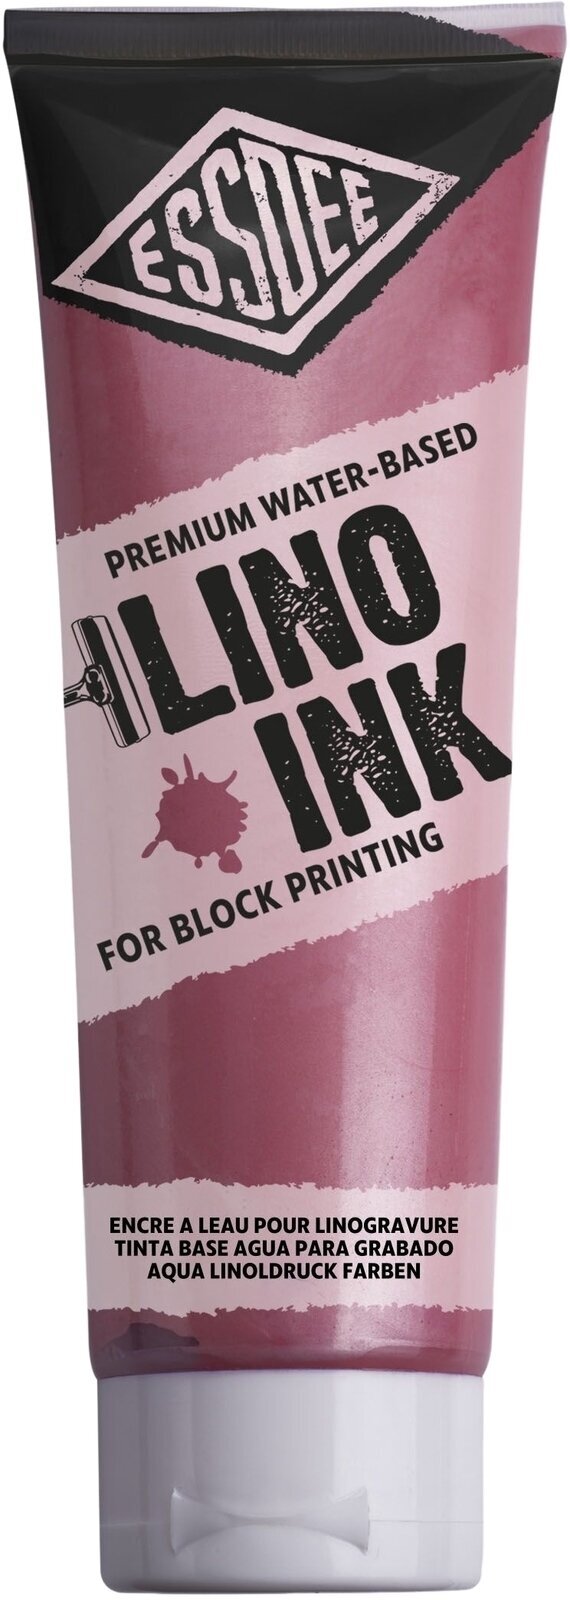 Boja za linorez Essdee Block Printing Ink Boja za linorez Pearlescent Pink 300 ml